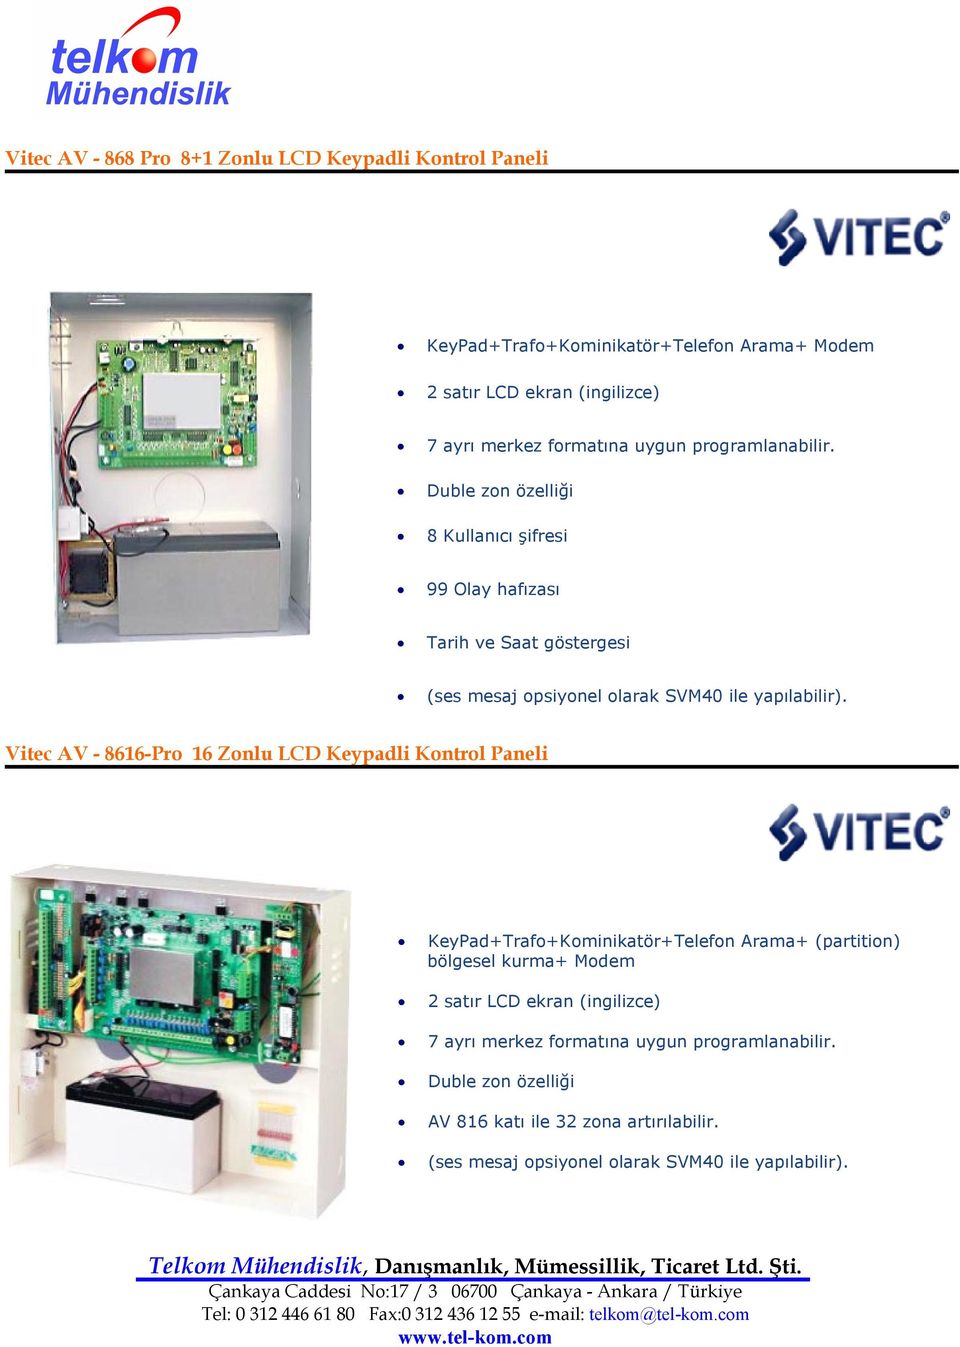 Vitec AV - 8616-Pro 16 Zonlu LCD Keypadli Kontrol Paneli KeyPad+Trafo+Kominikatör+Telefon Arama+ (partition) bölgesel kurma+ Modem 2 satır LCD ekran